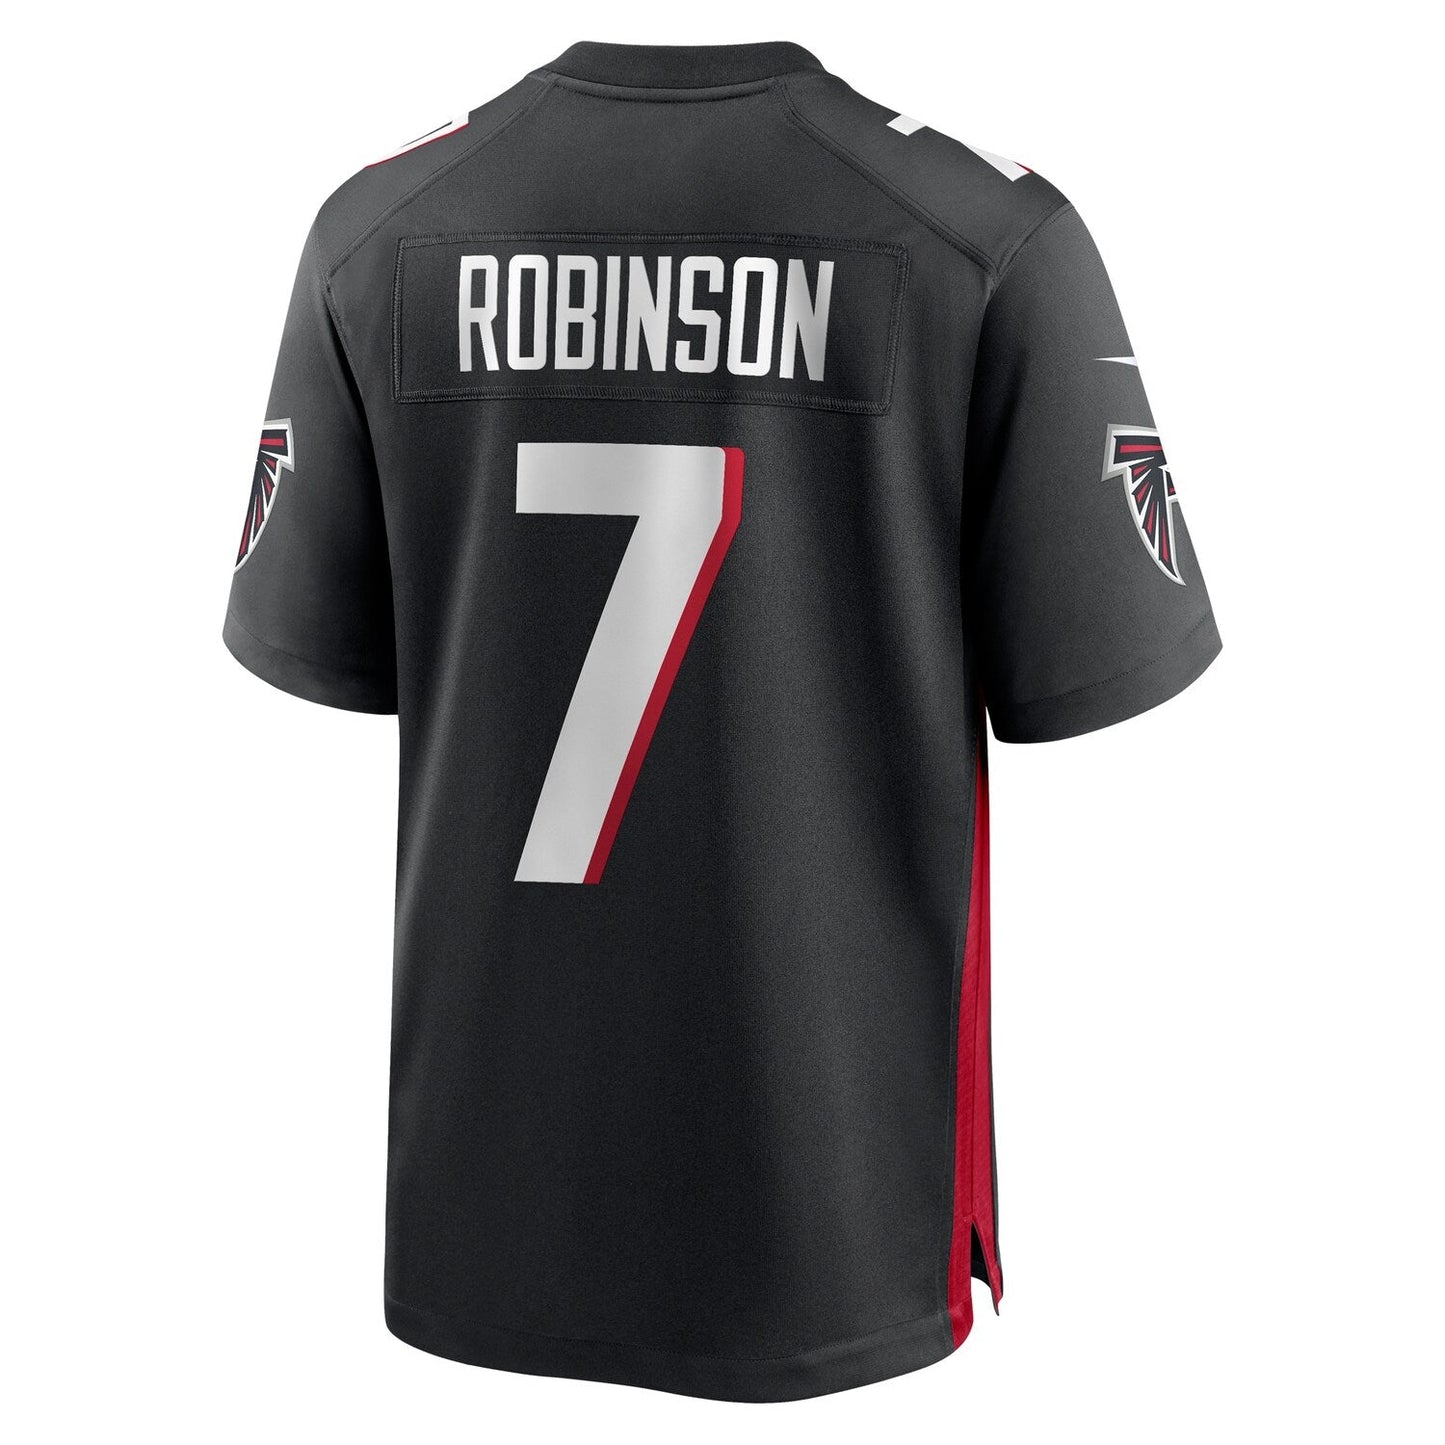 Youth Bijan Robinson Atlanta Falcons Nike Black Game Replica Jersey